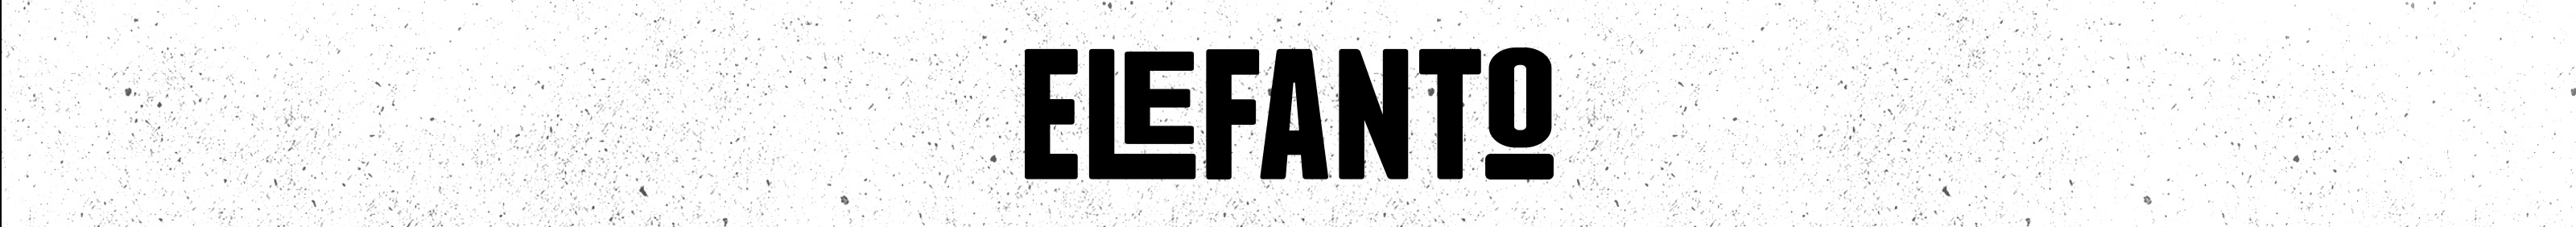 Javier Elefanto's profile banner